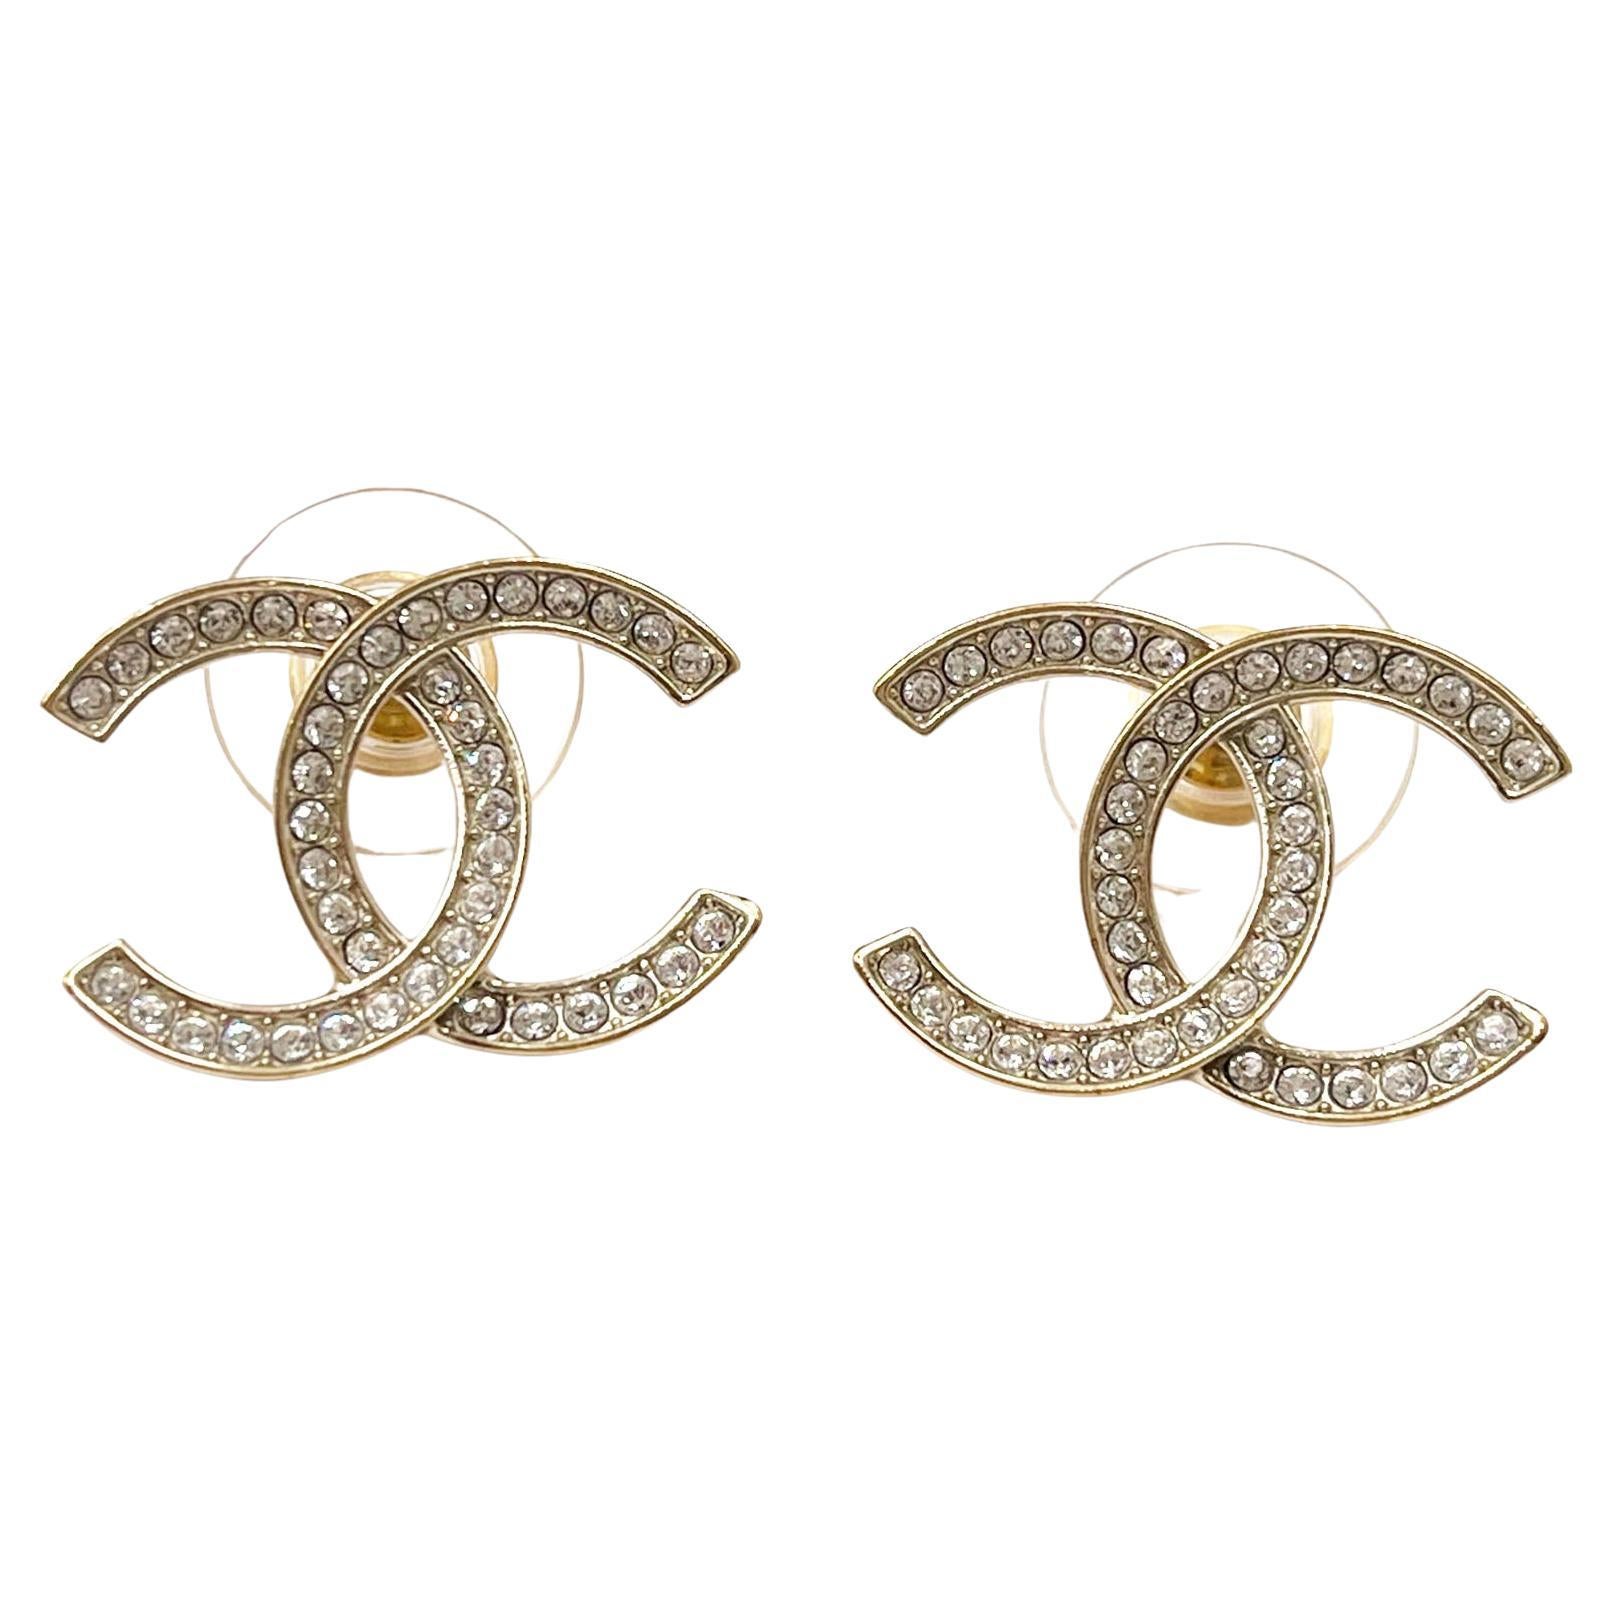 Chanel Earrings 21 - 16 For Sale on 1stDibs  chanel earrings 2021, chanel  padlock earrings, chanel cc stud earrings